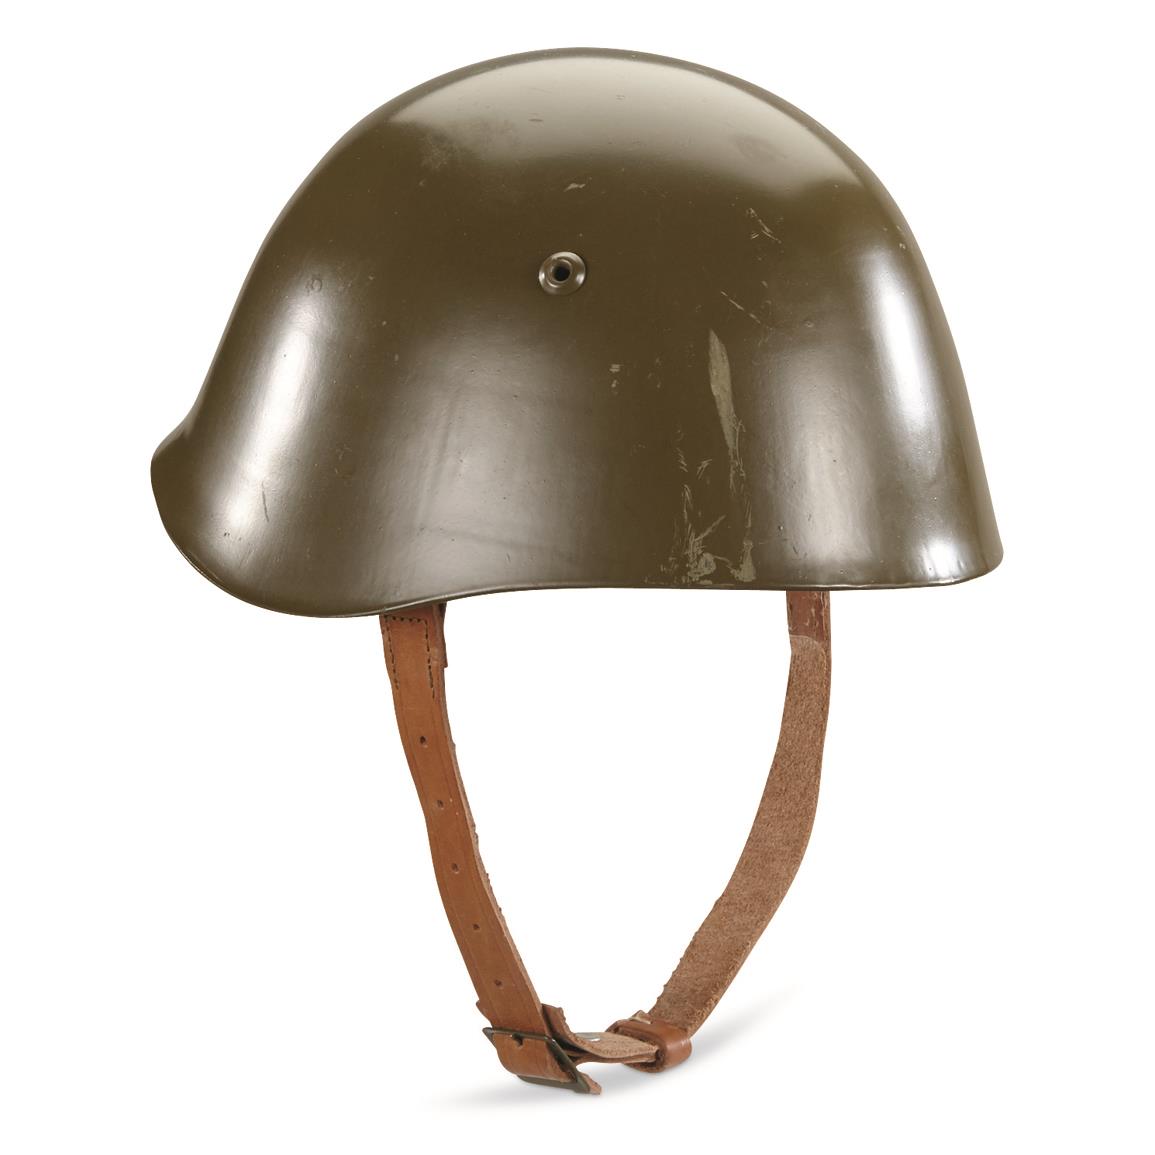 Bulgarian Military Surplus M72 Steel Pot Helmet, Used